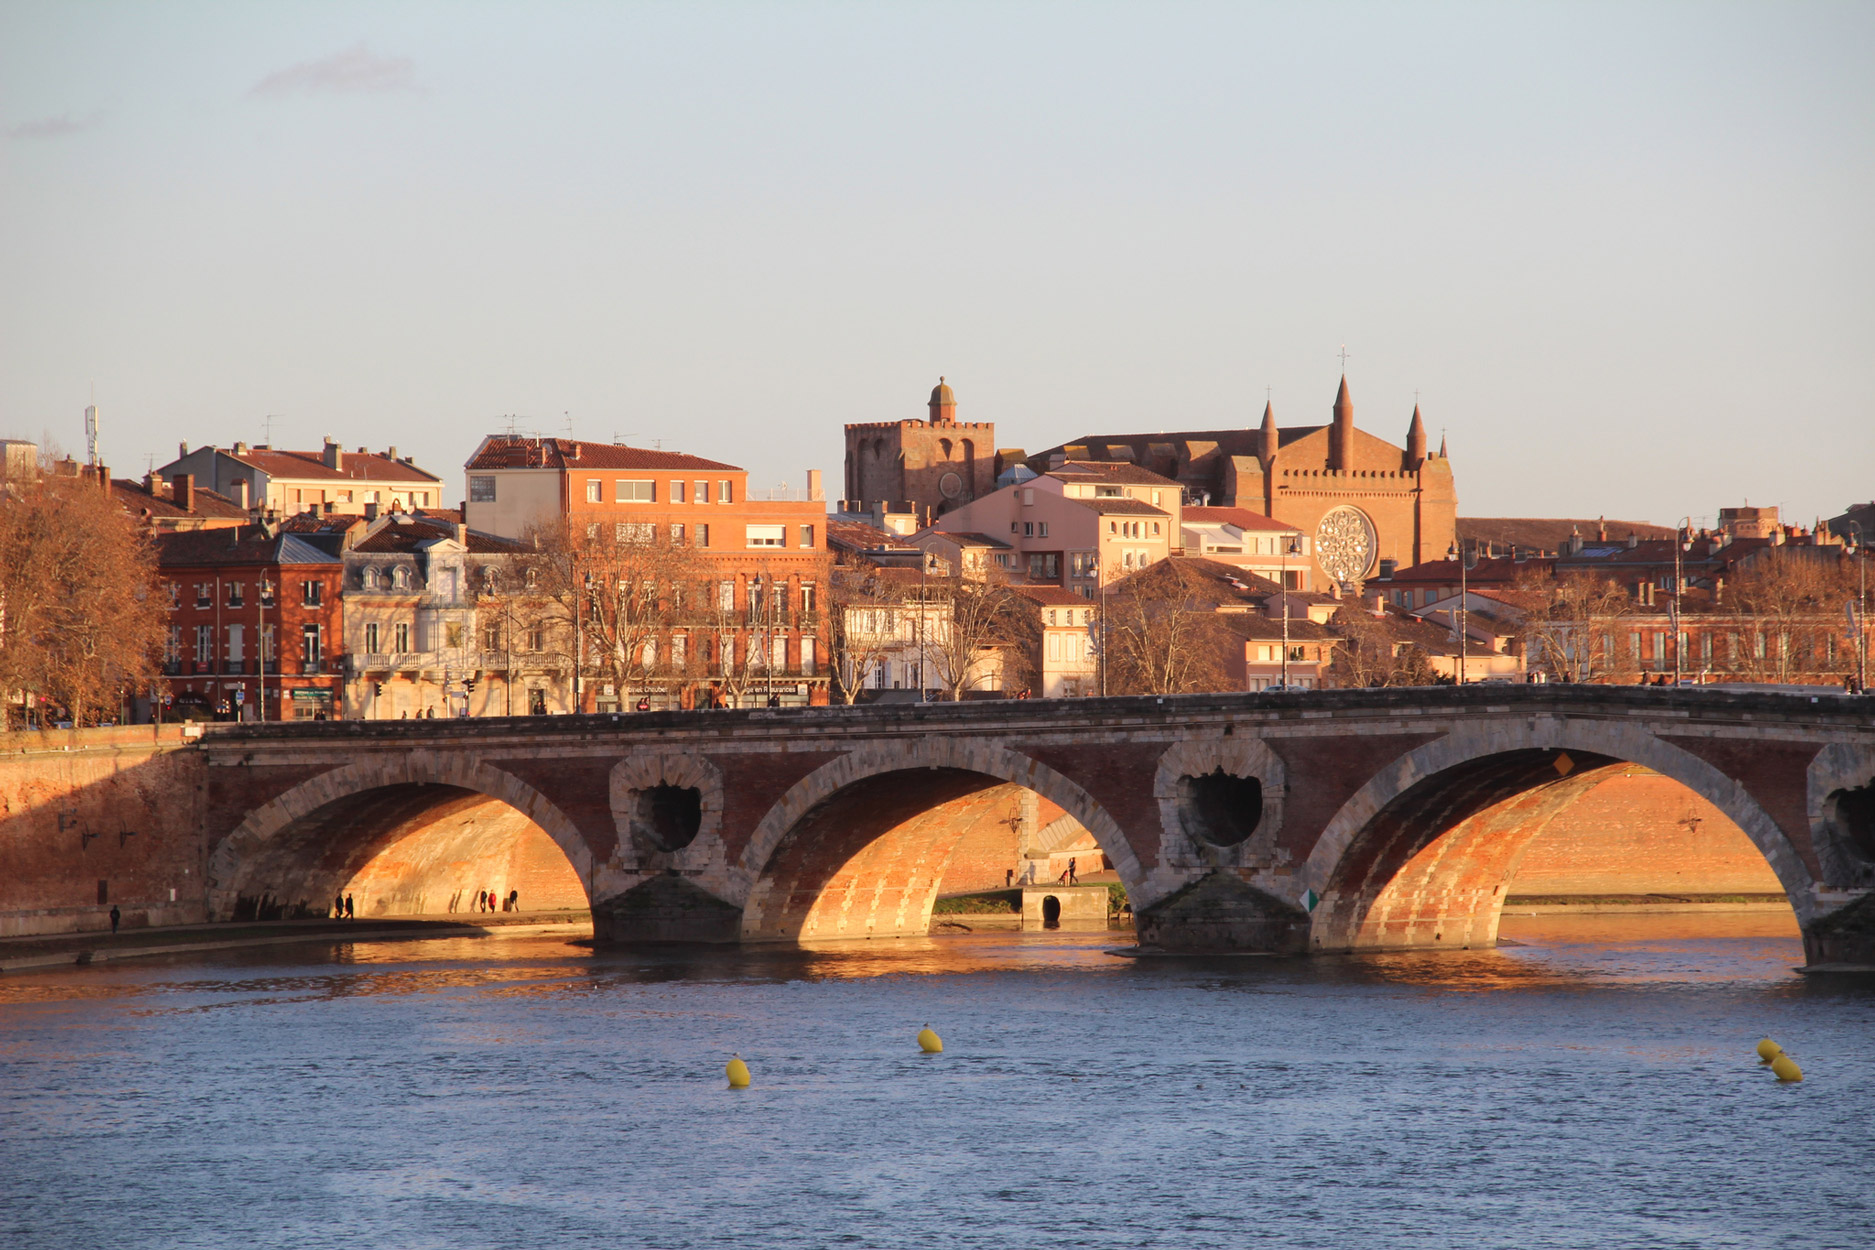 Toulouse, le Pont Neuf